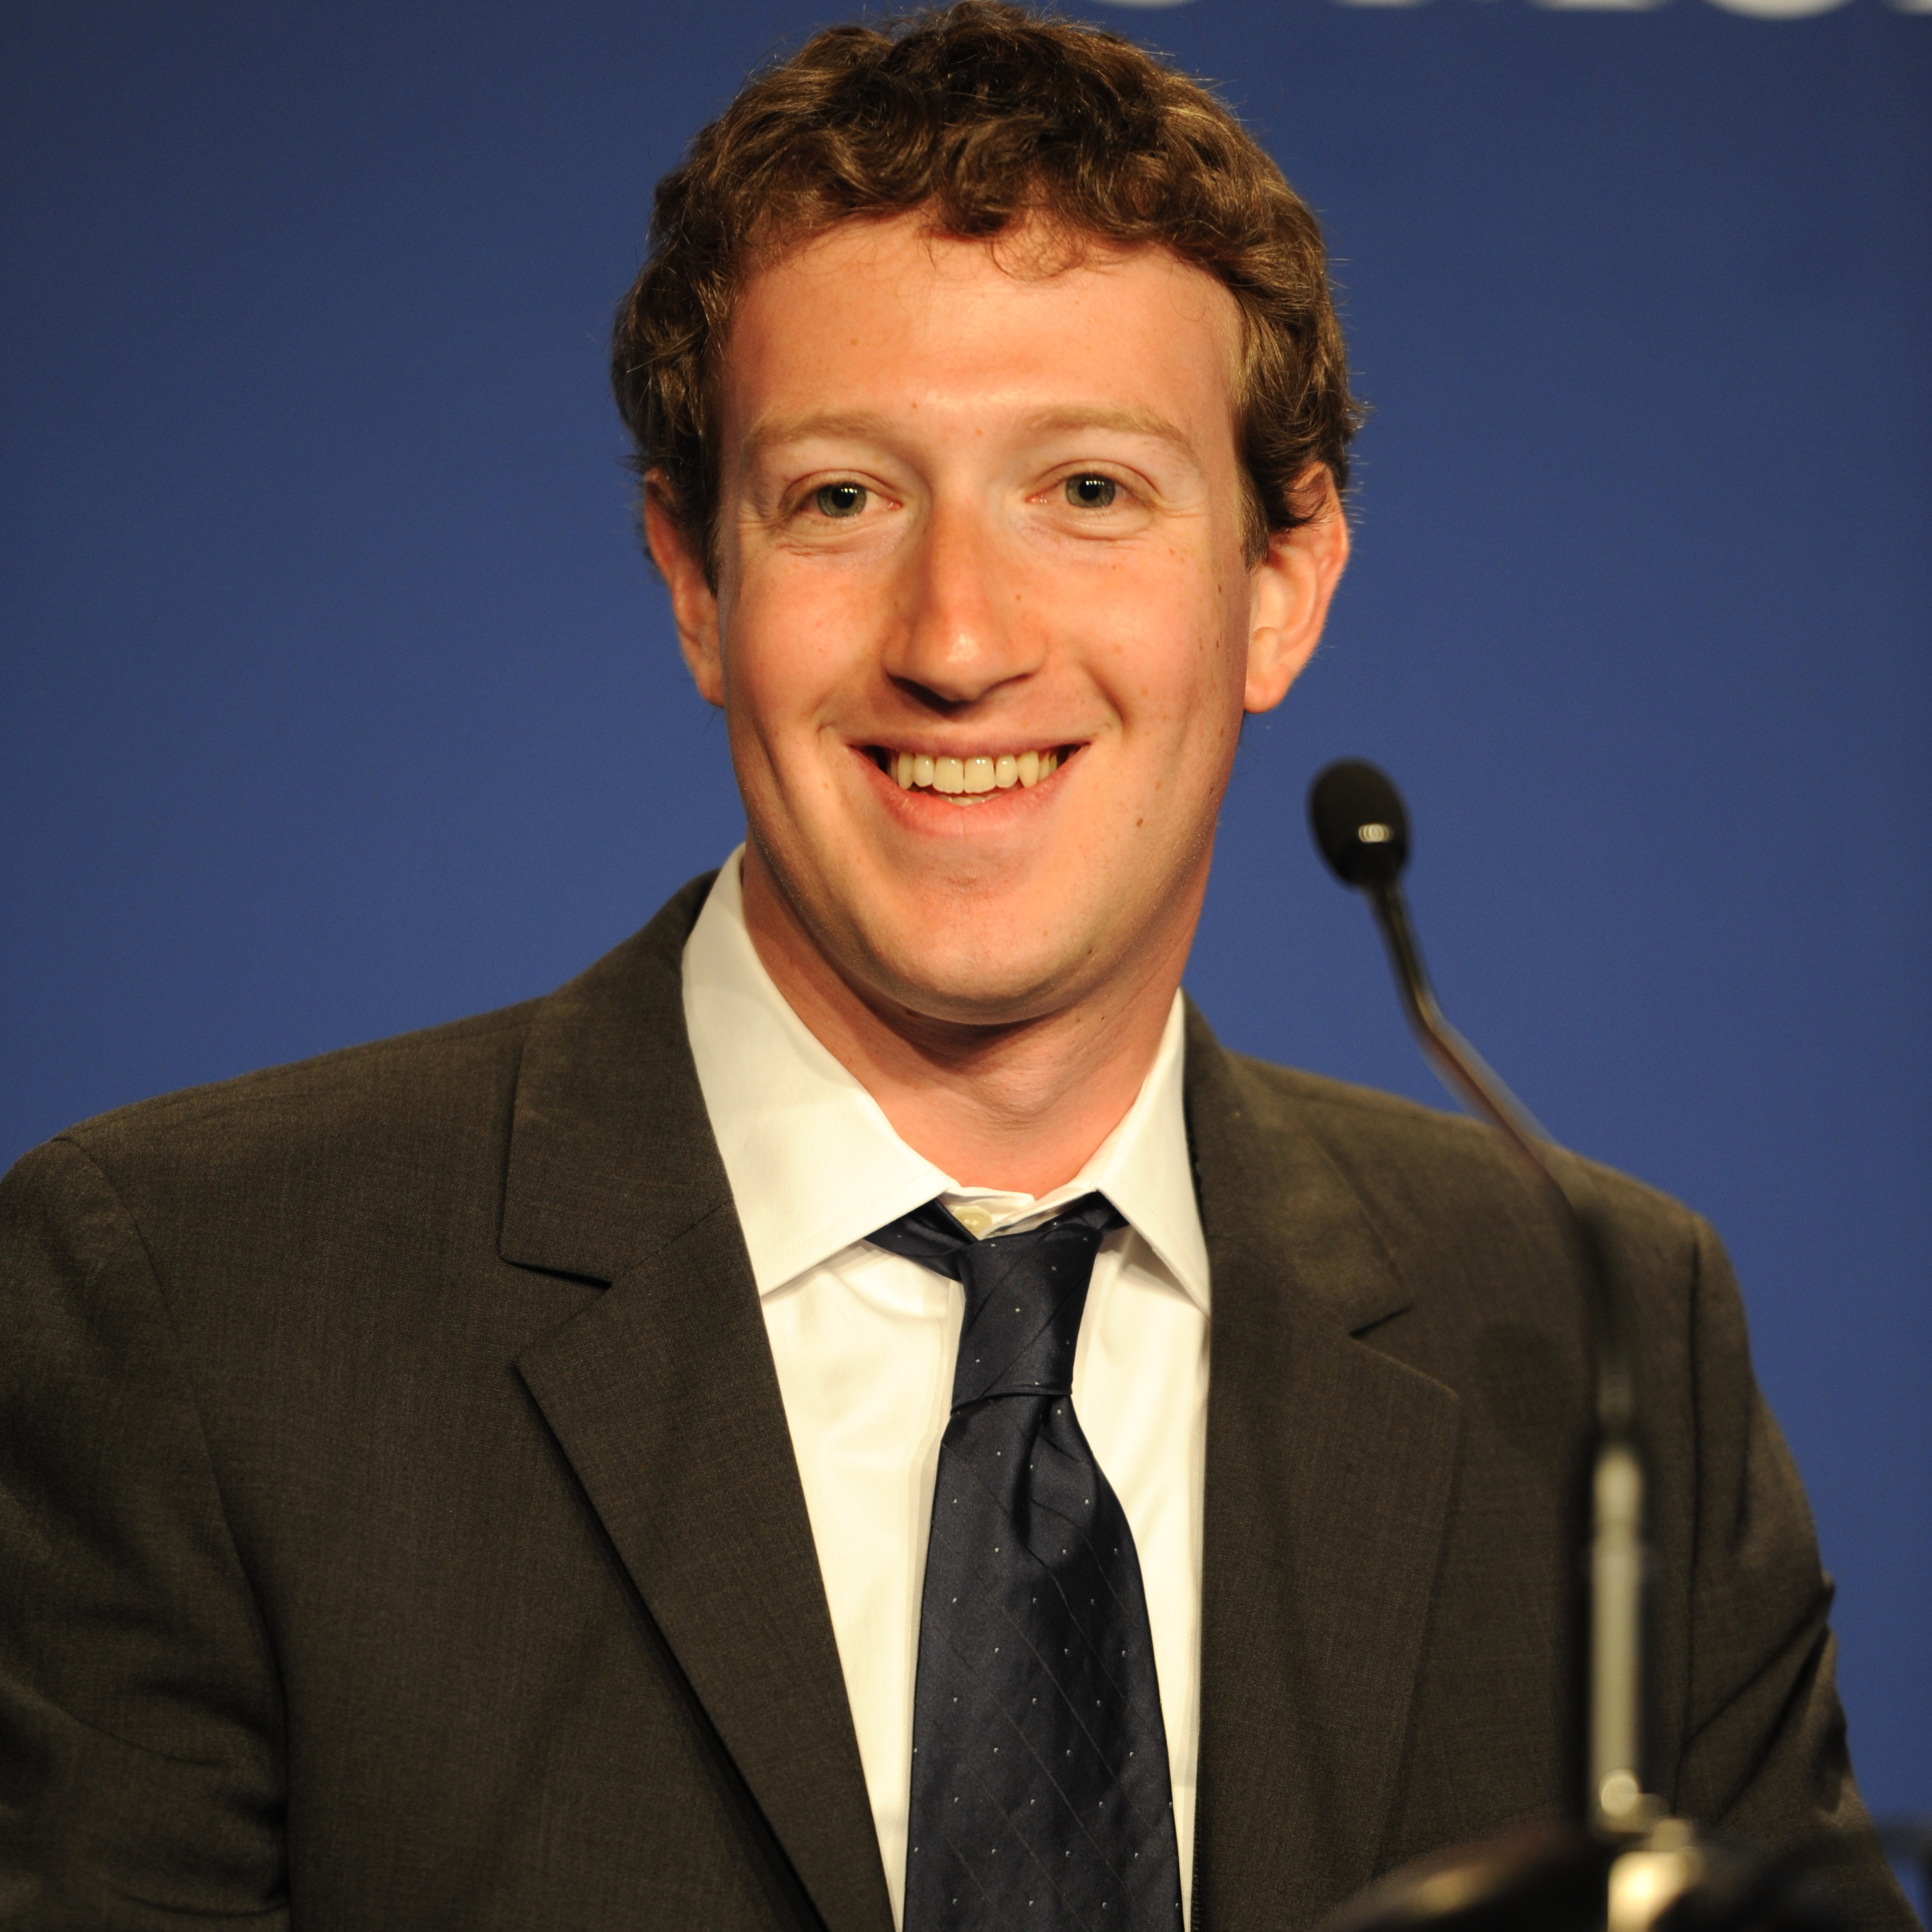 Zuckerberg reveals his hiring strategy at Facebook